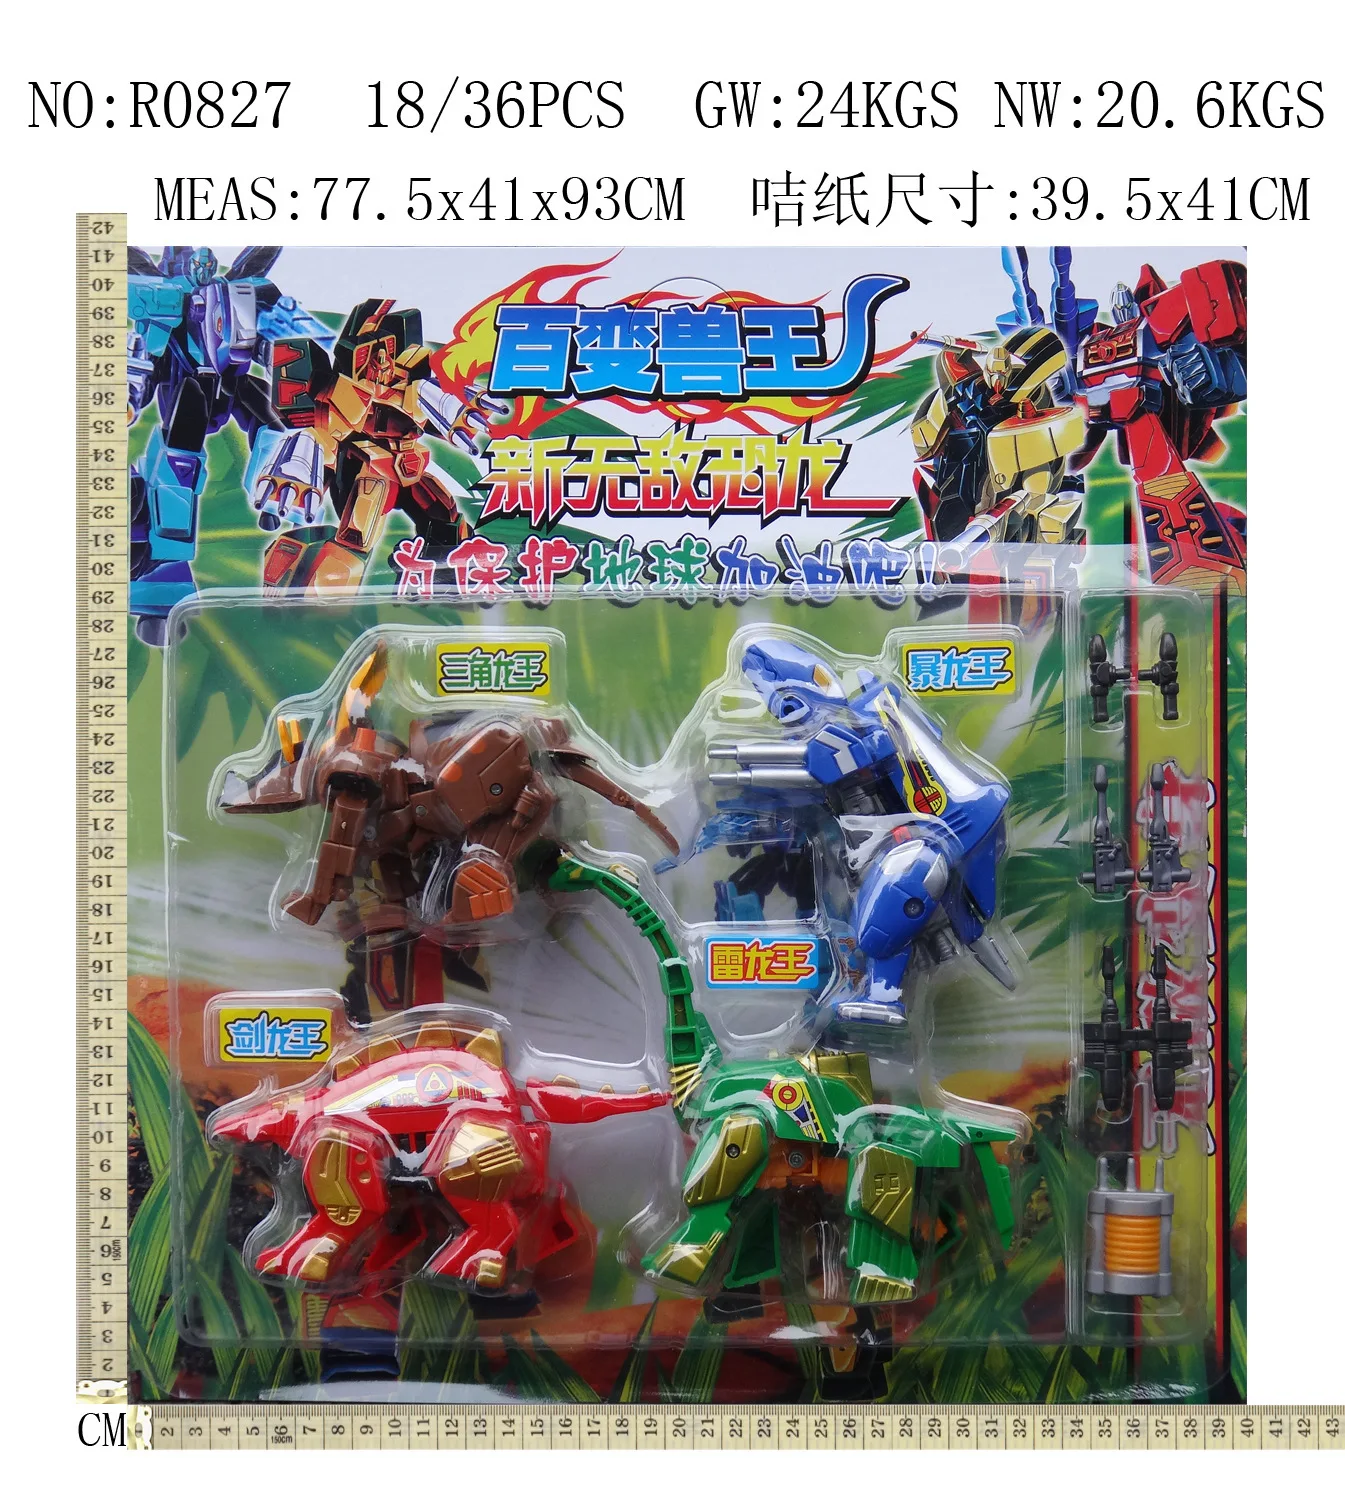 

Super Sentai Rangers Toy Transformation Robot Model Hyakujuu Sentai Gaoranger Action Figures Collection Kids Toy Birthday Gift